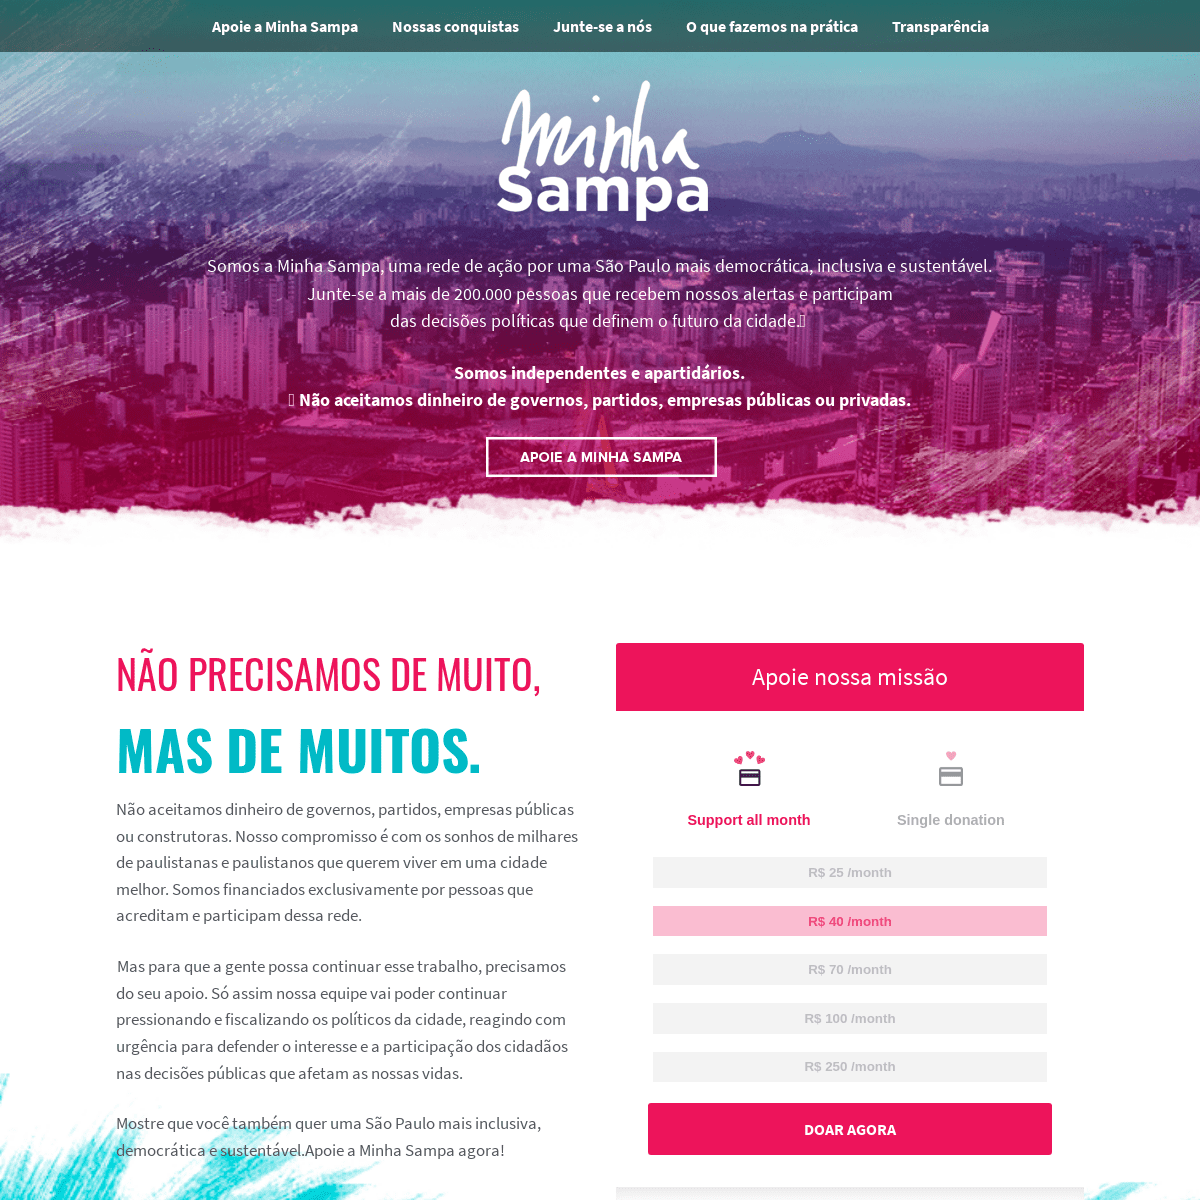 A complete backup of minhasampa.org.br